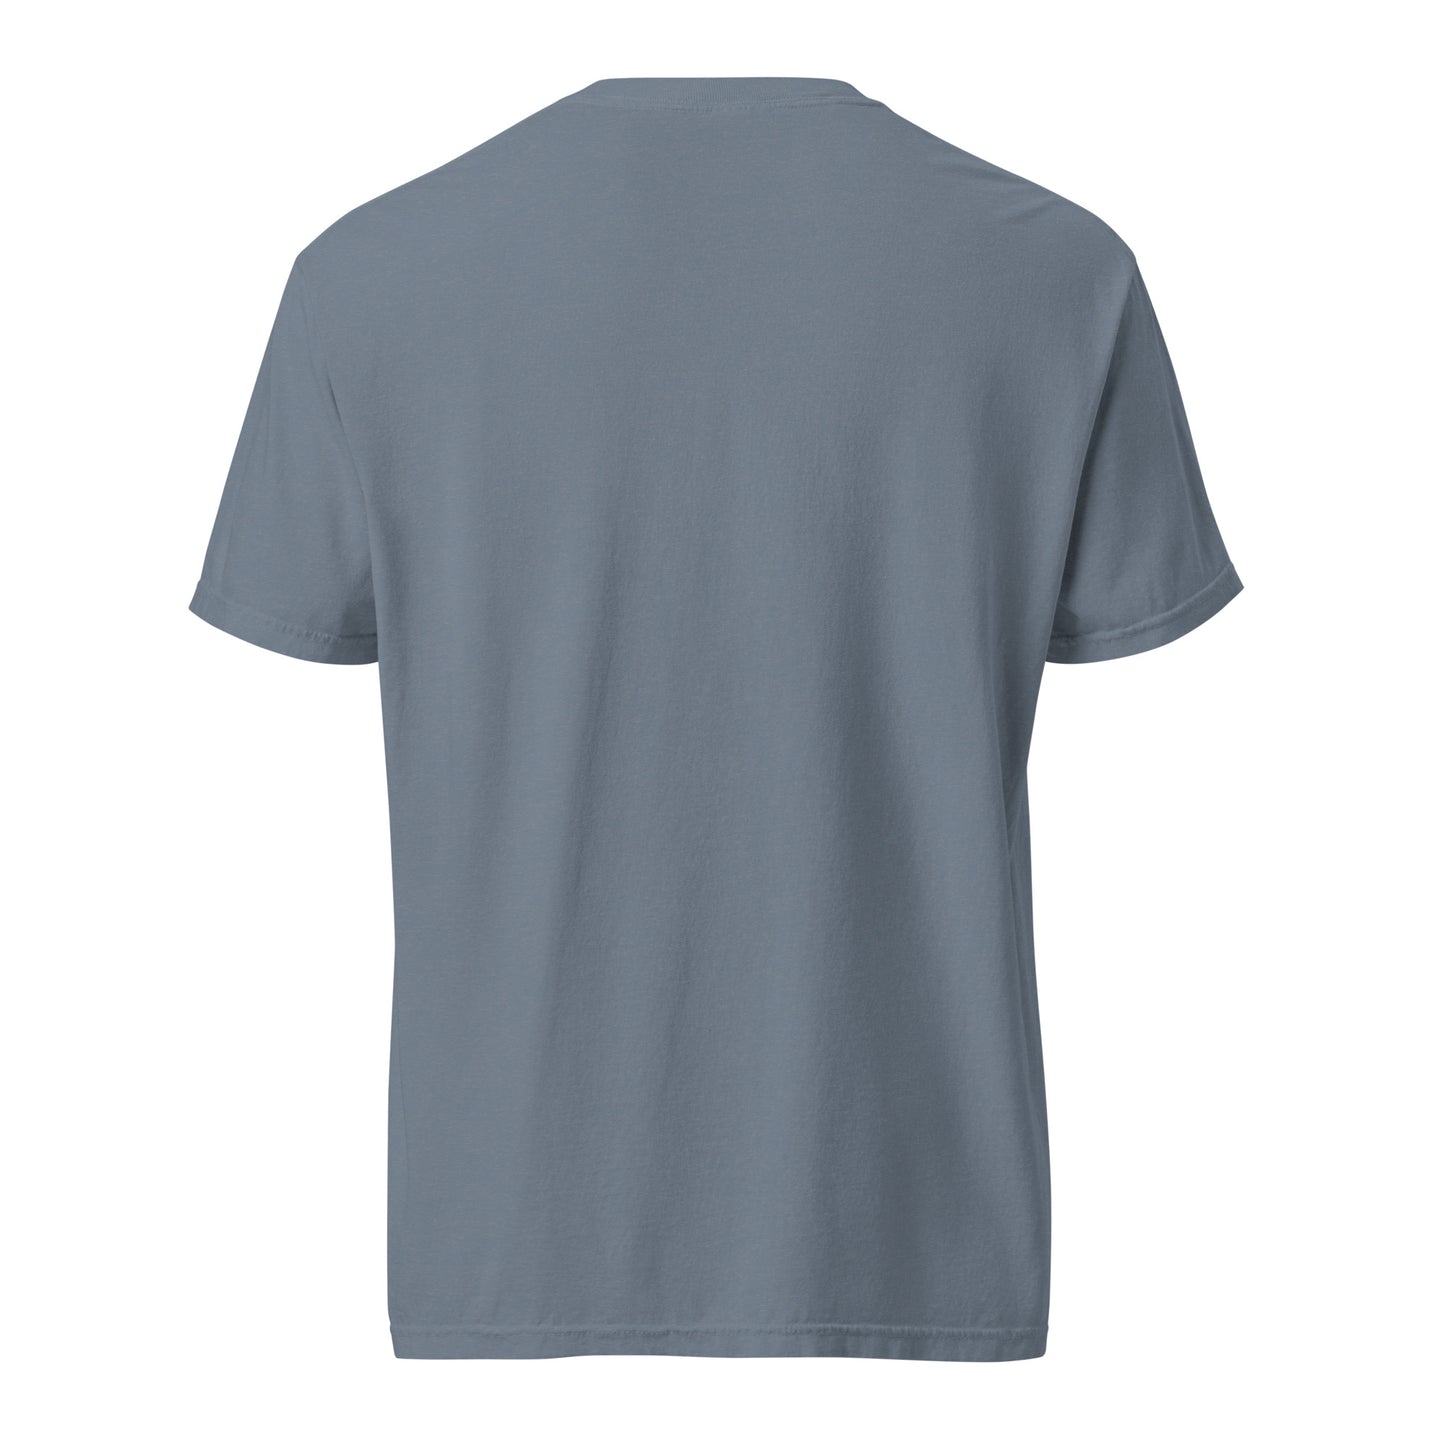 Oregon Dreams - Unisex garment-dyed heavyweight t-shirt